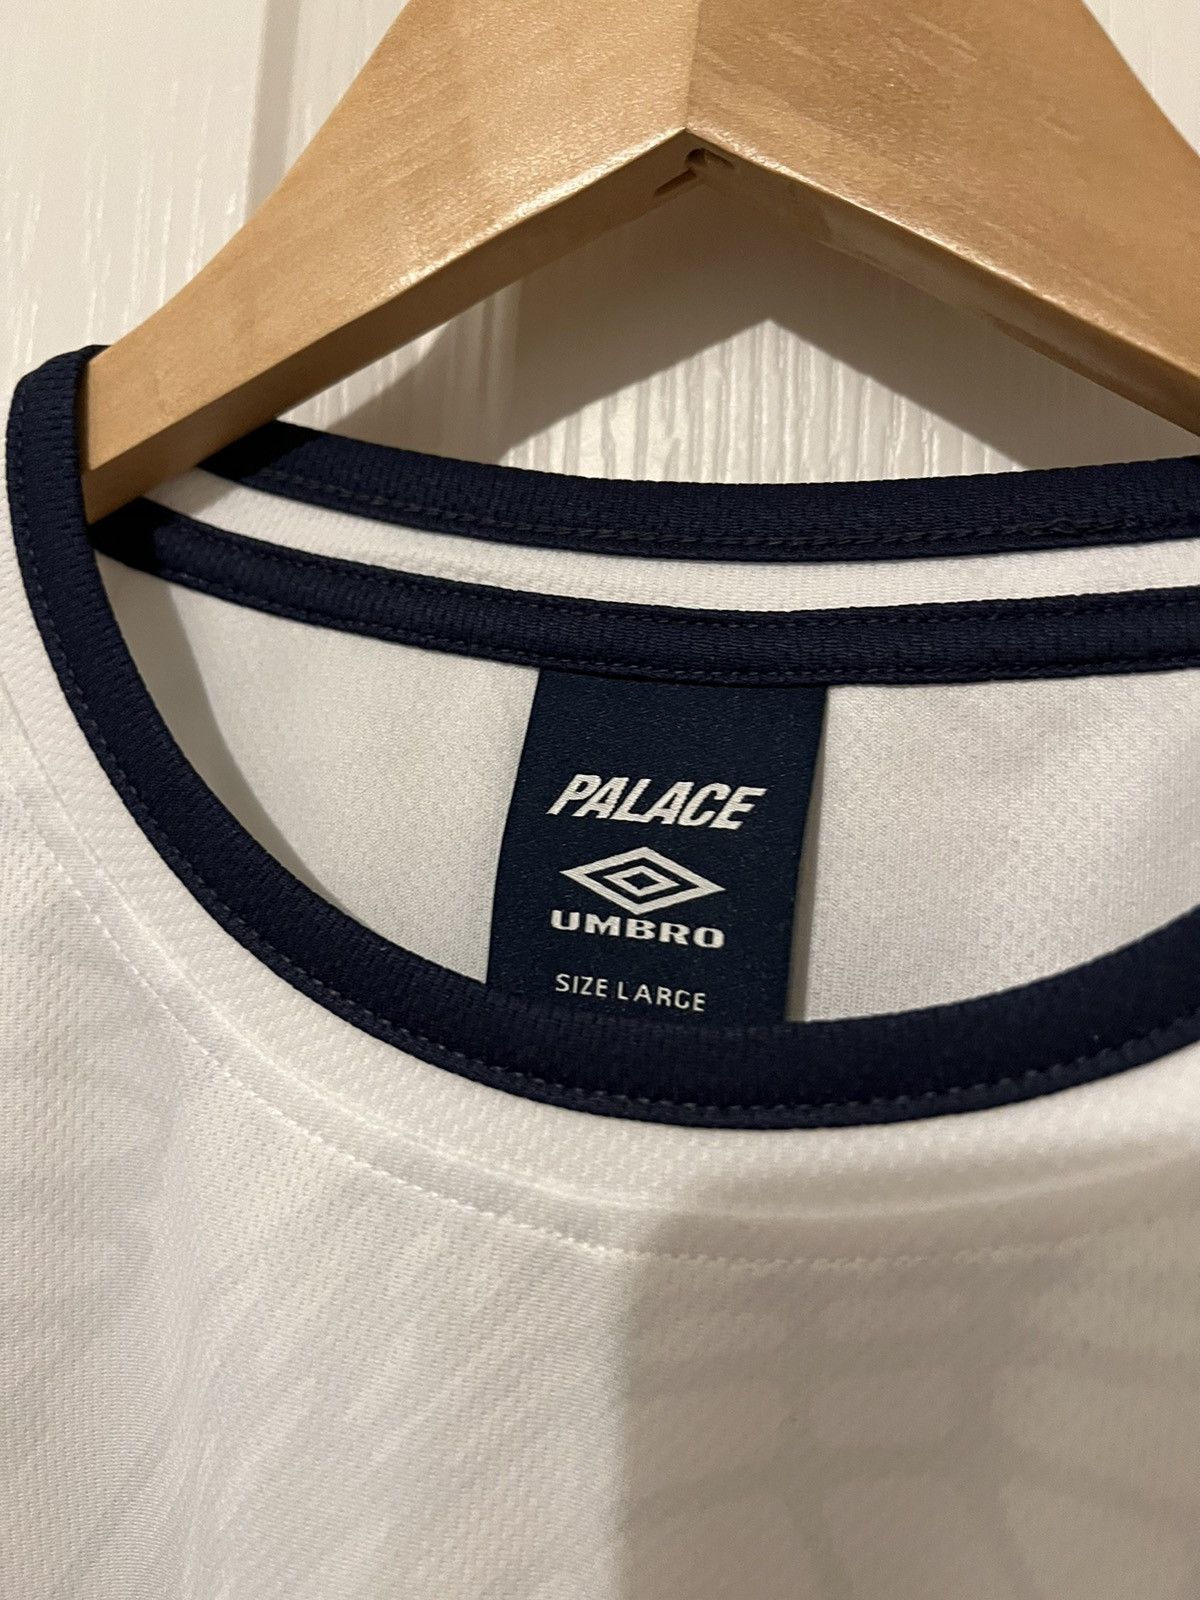 Palace Palace umbro home shirt jersey | Grailed